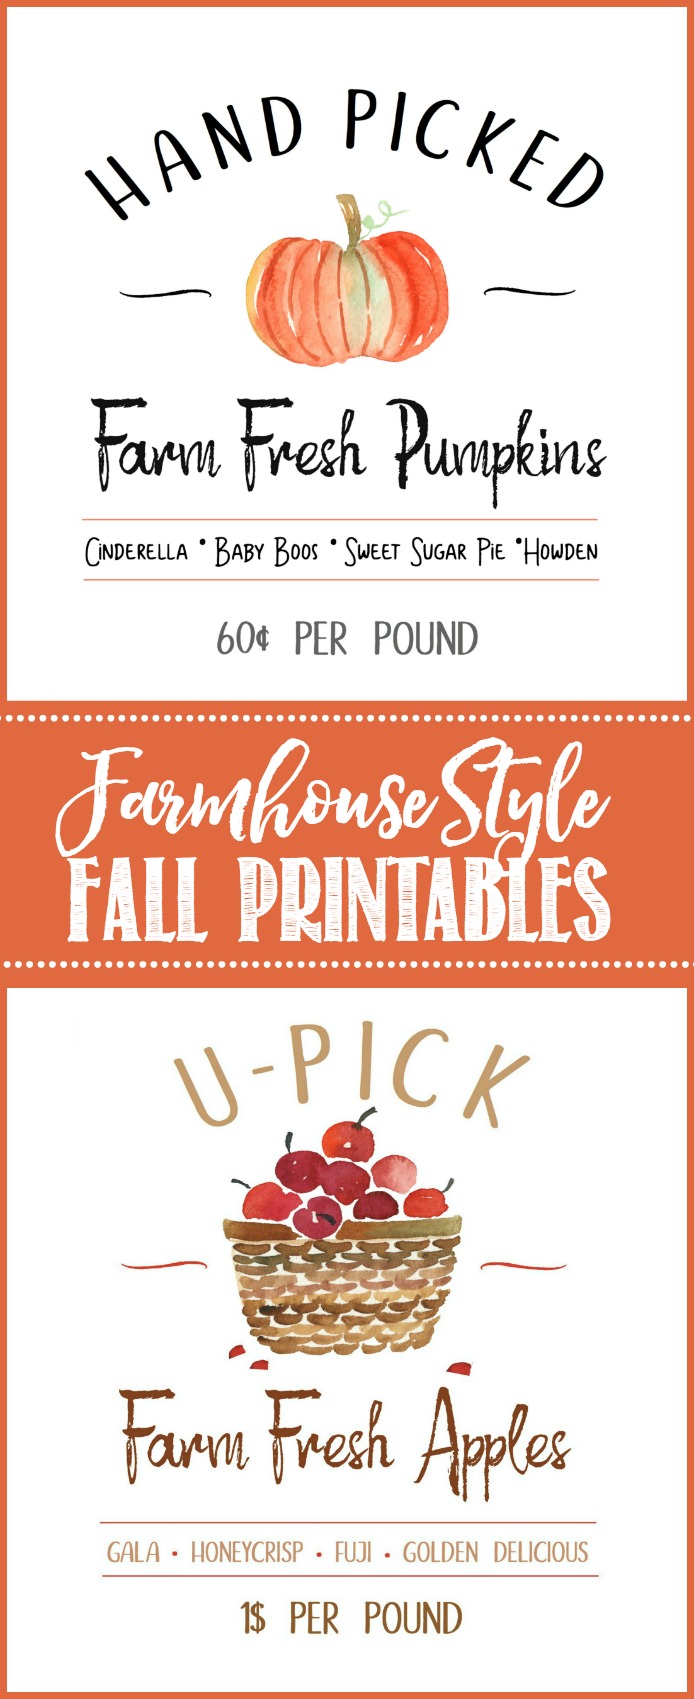 Collection of farmhouse style fall printables - Farm Fresh Pumpkins and U-Pick Farm Fresh Apples.